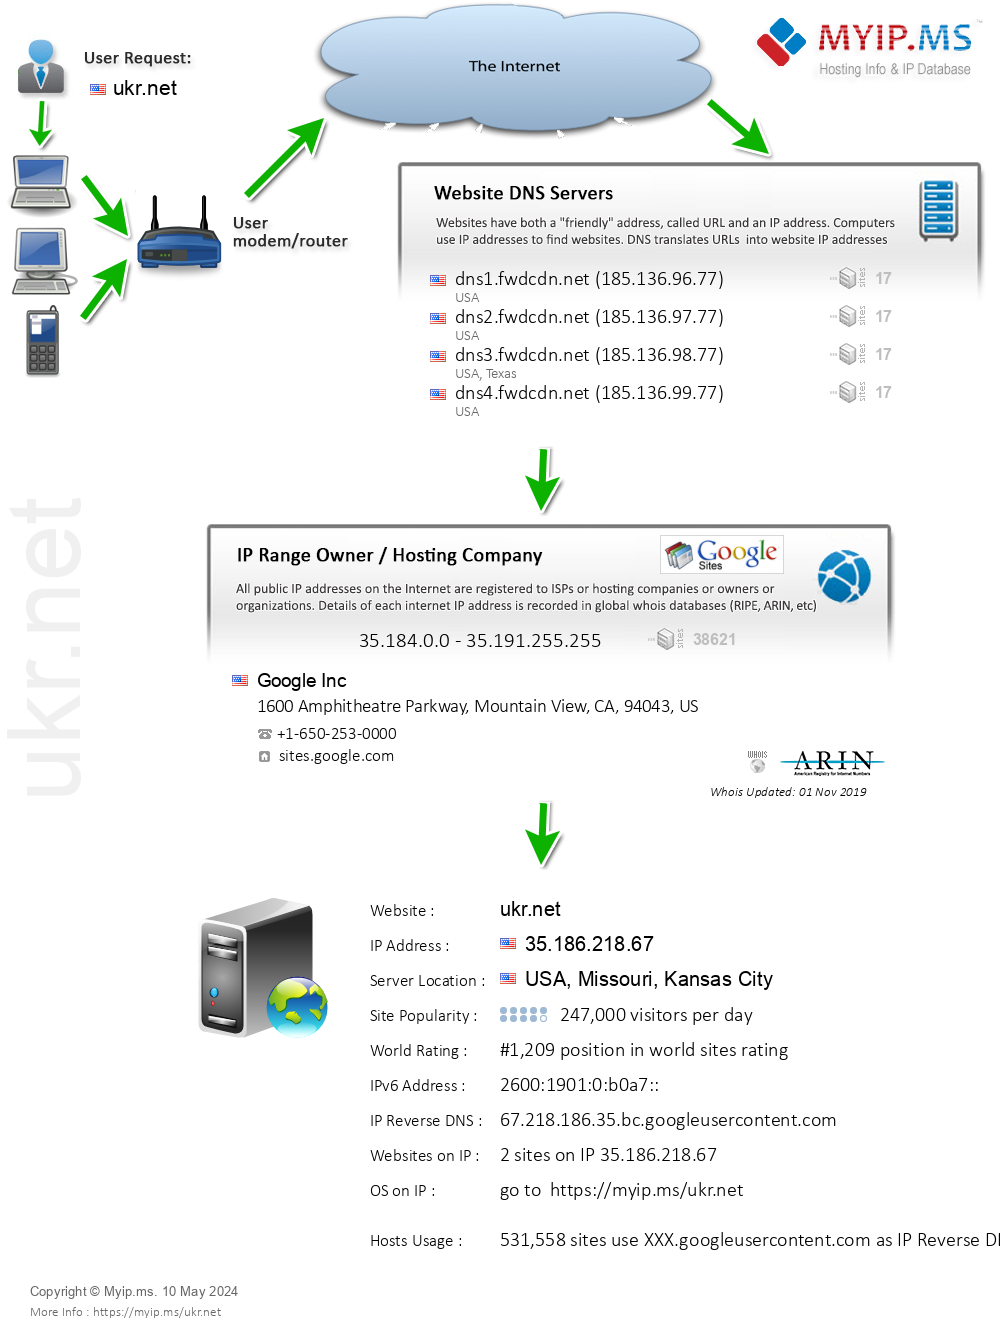 Ukr.net - Website Hosting Visual IP Diagram